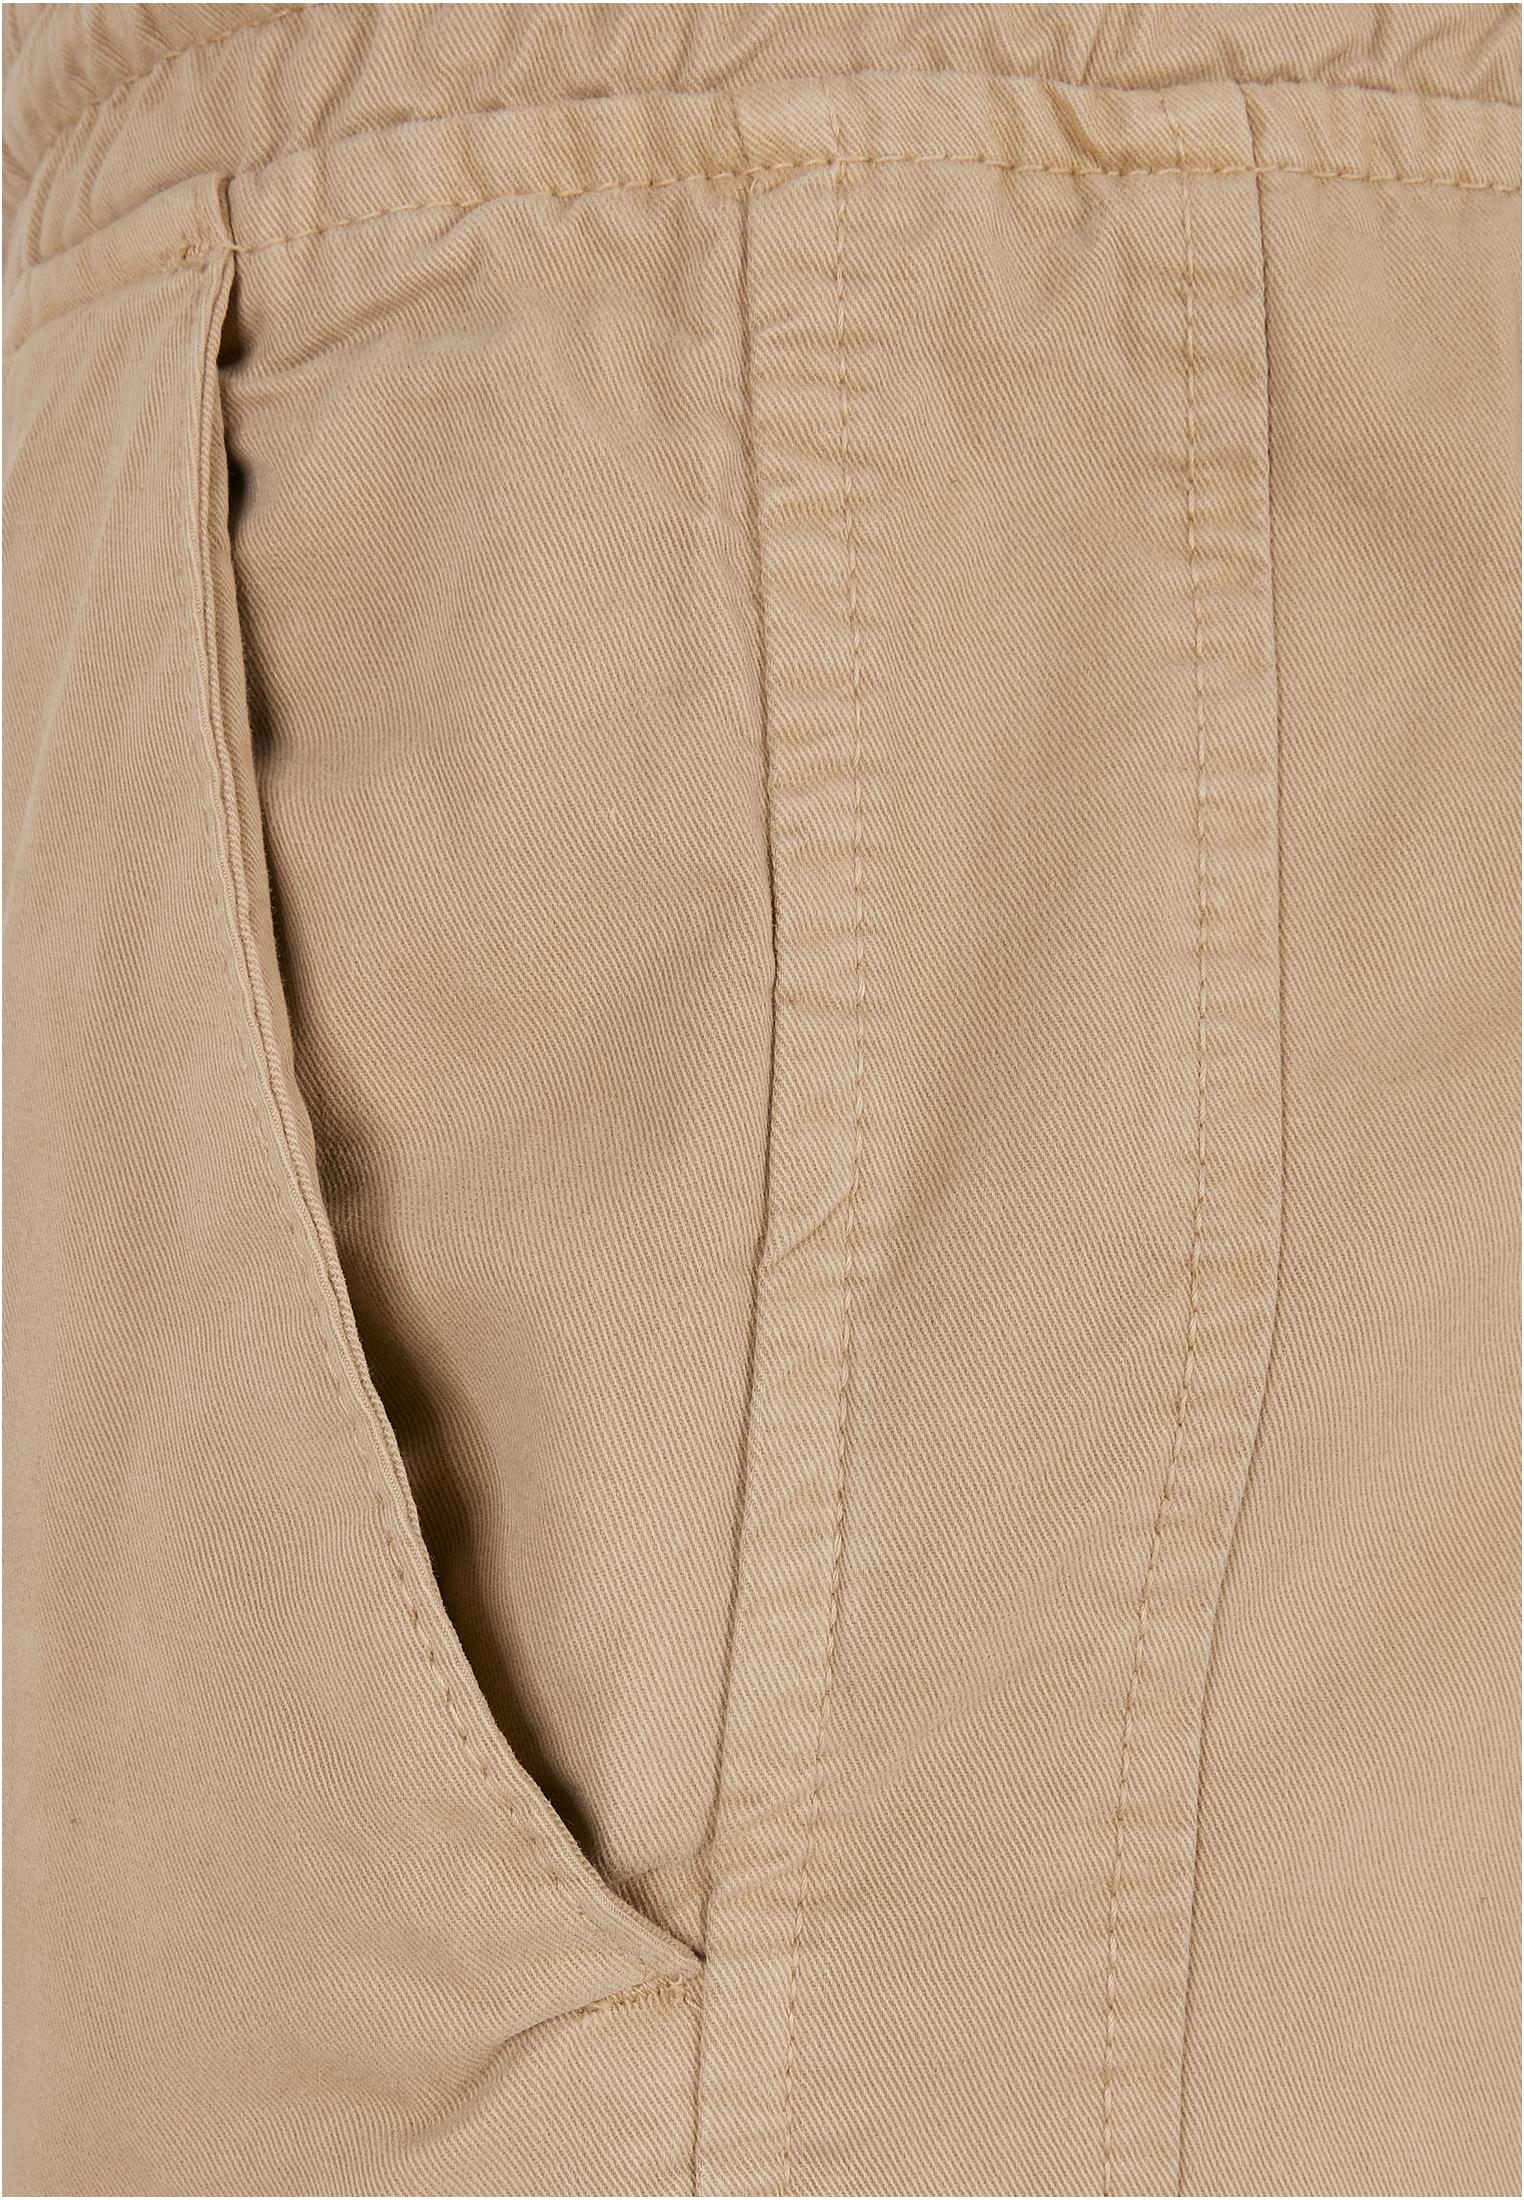 Sweatpants Military Jogg Pants in Farbe unionbeige